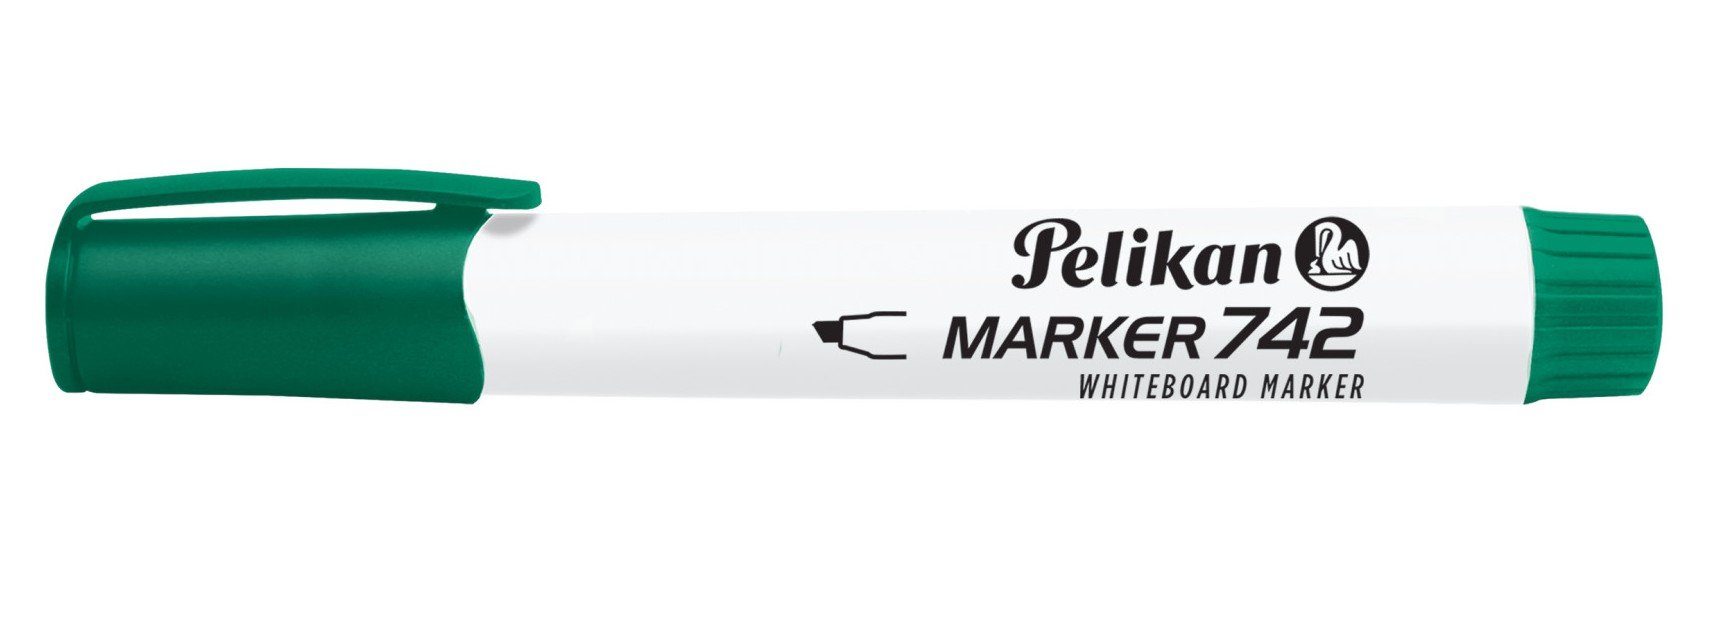 Pelikan Marker Pelikan Whiteboard Marker 742 grün